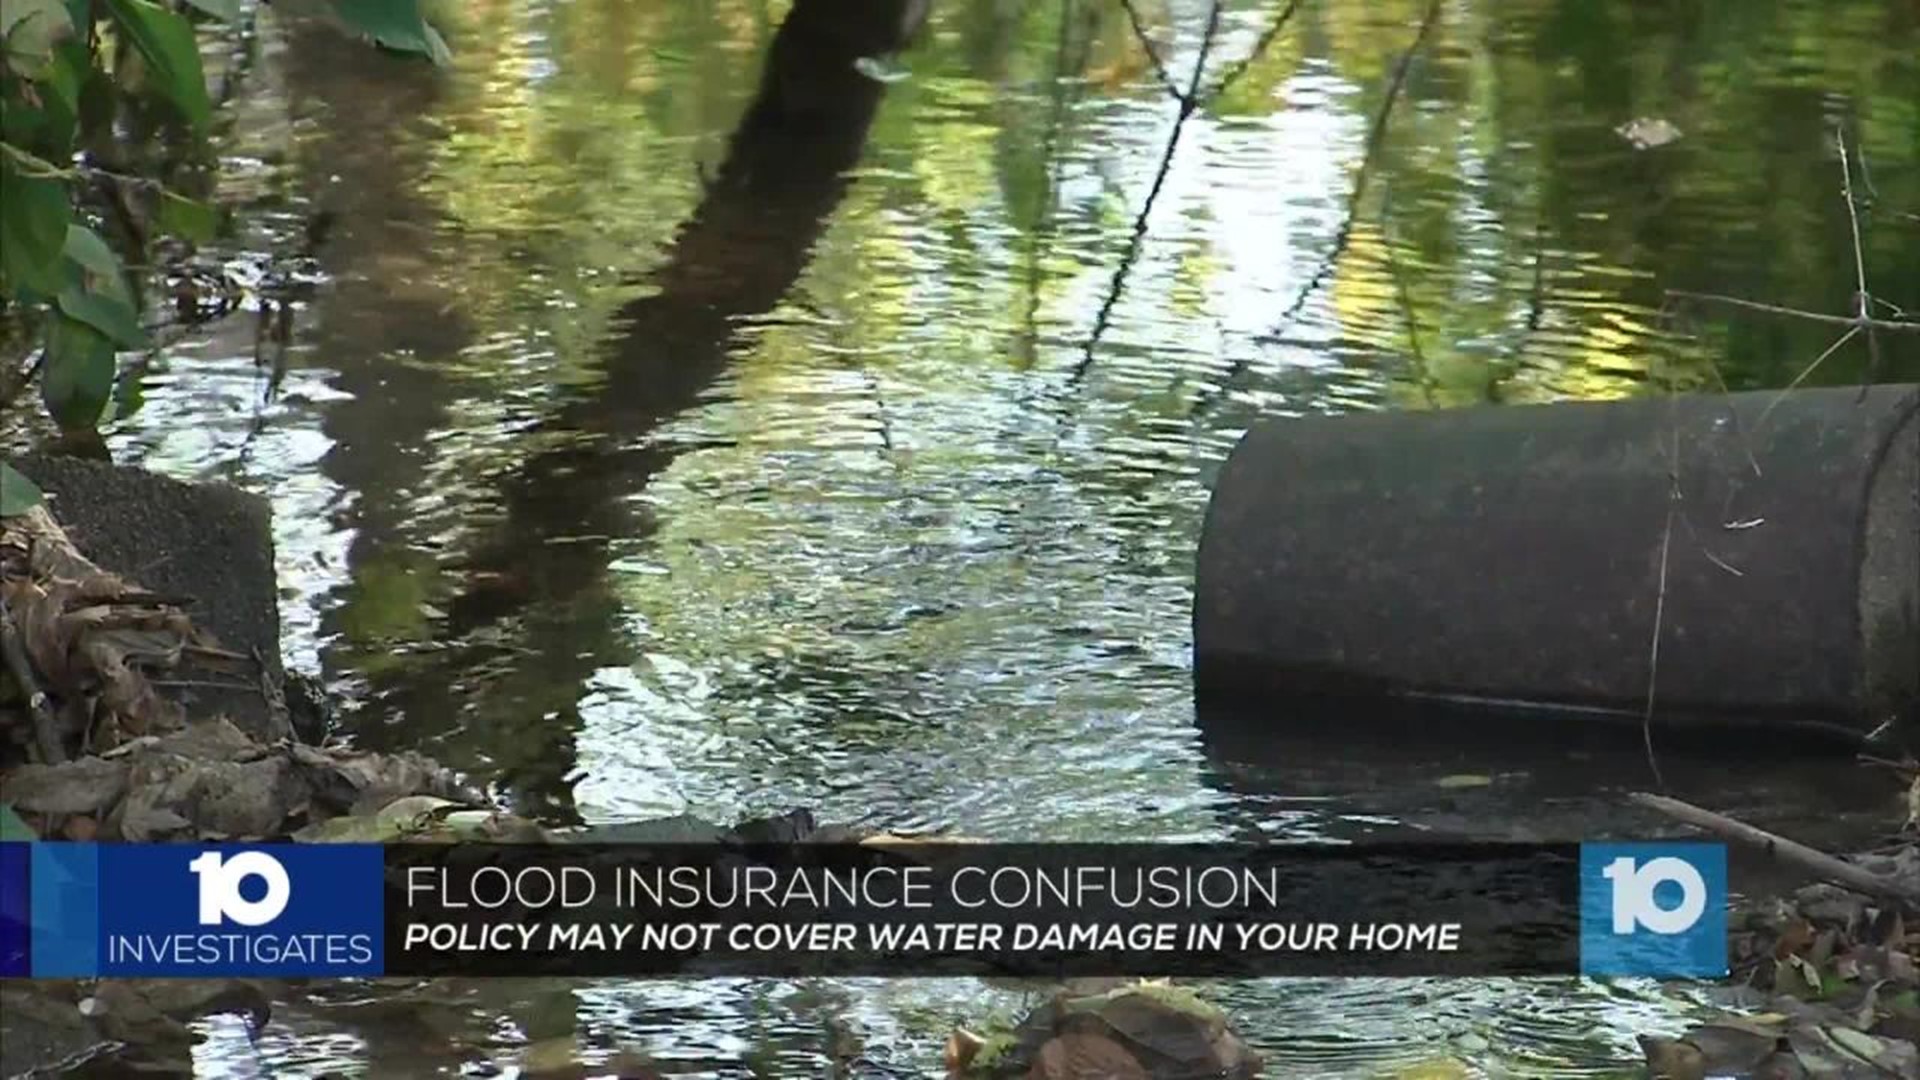 Flooding Insurance